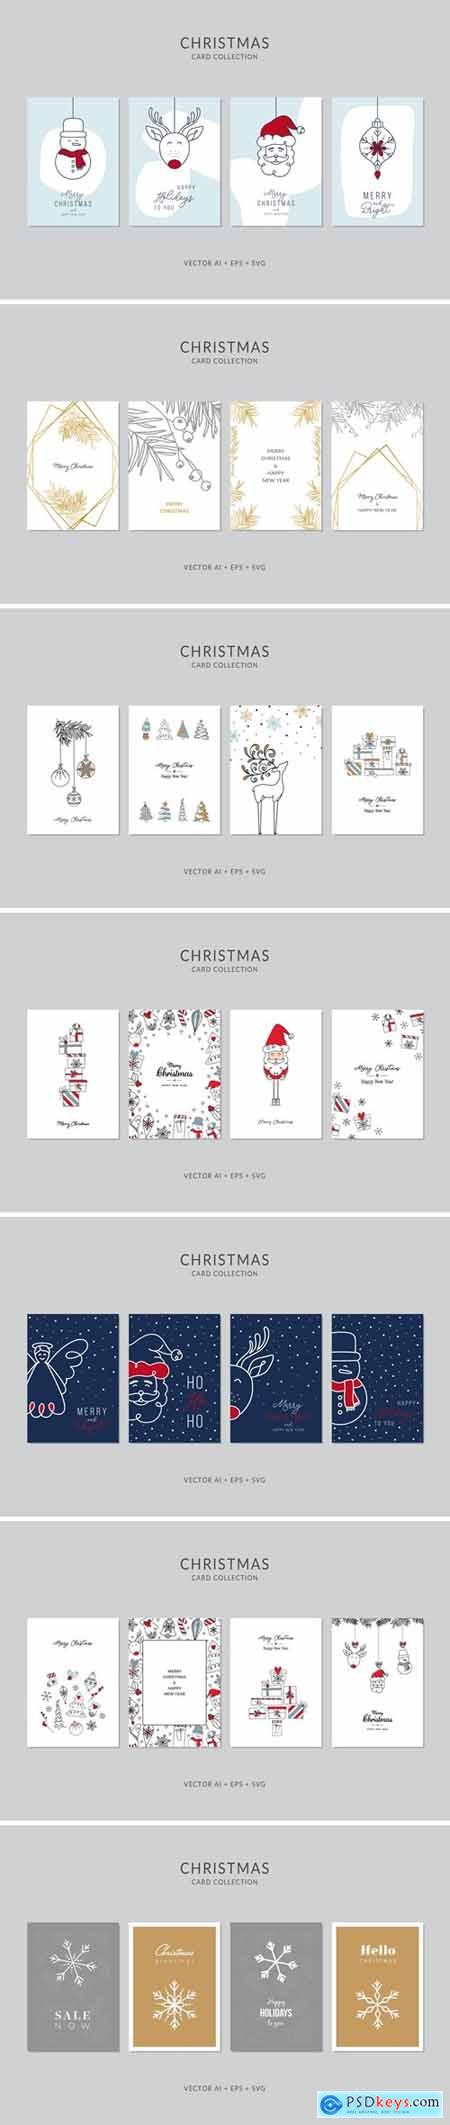 Christmas Greeting Card Vector Set